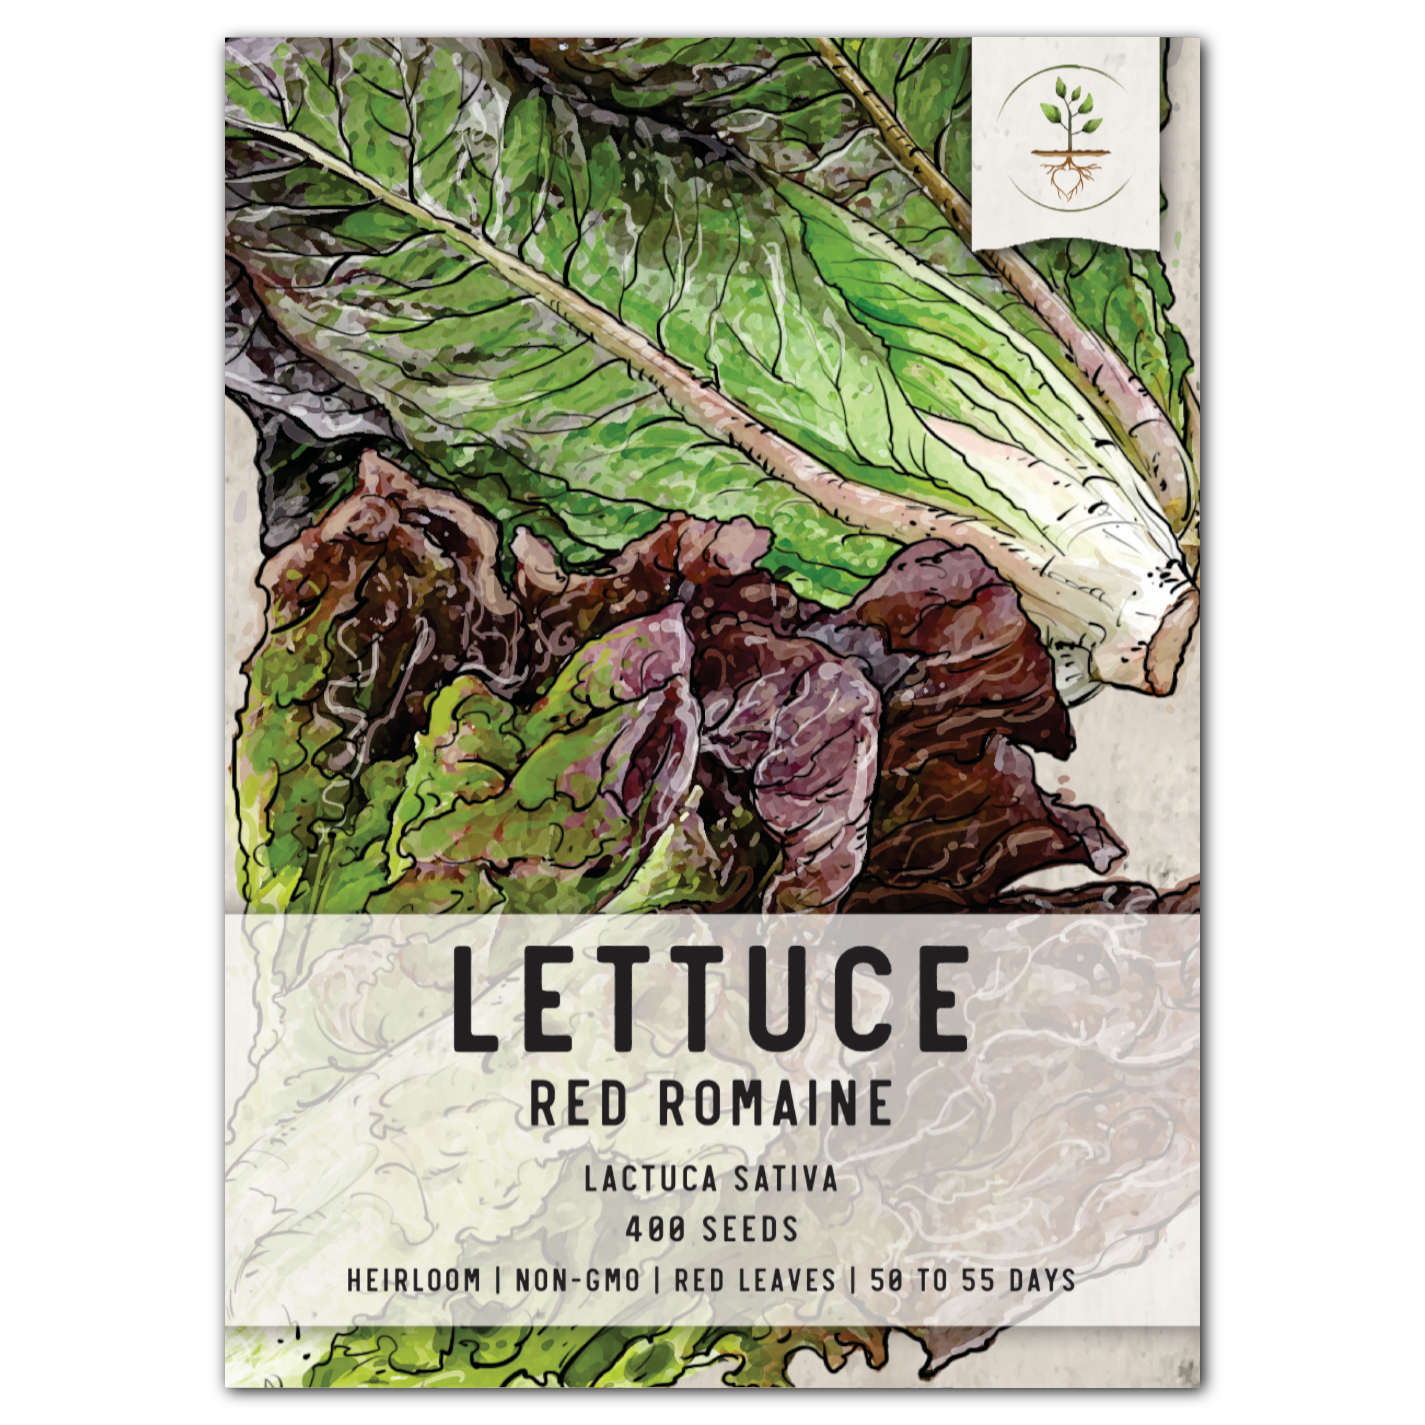 romaine lettuce sprouts